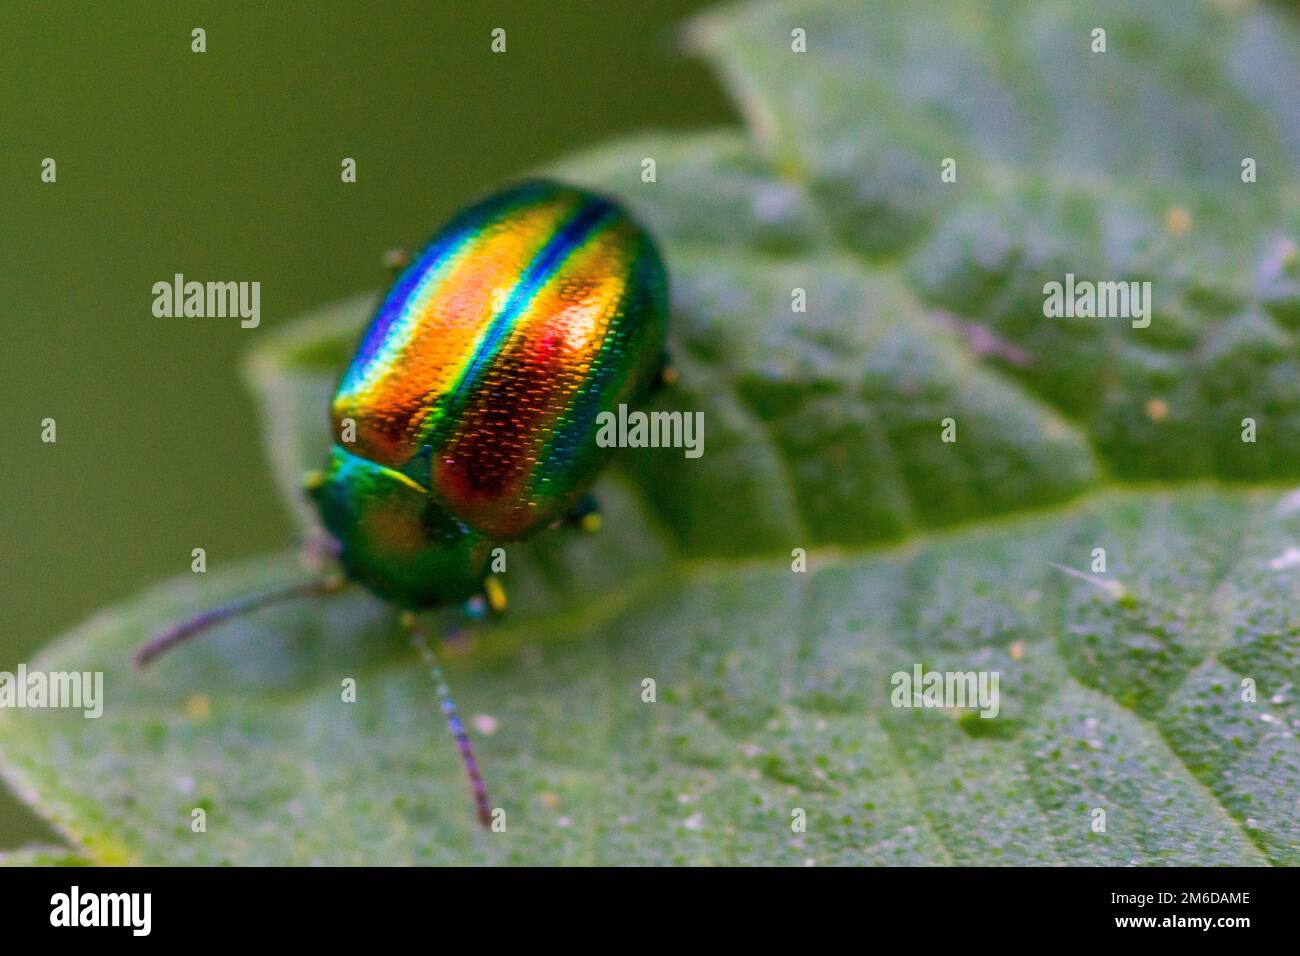 Colorful shiny beetle on leaf Stock Photo